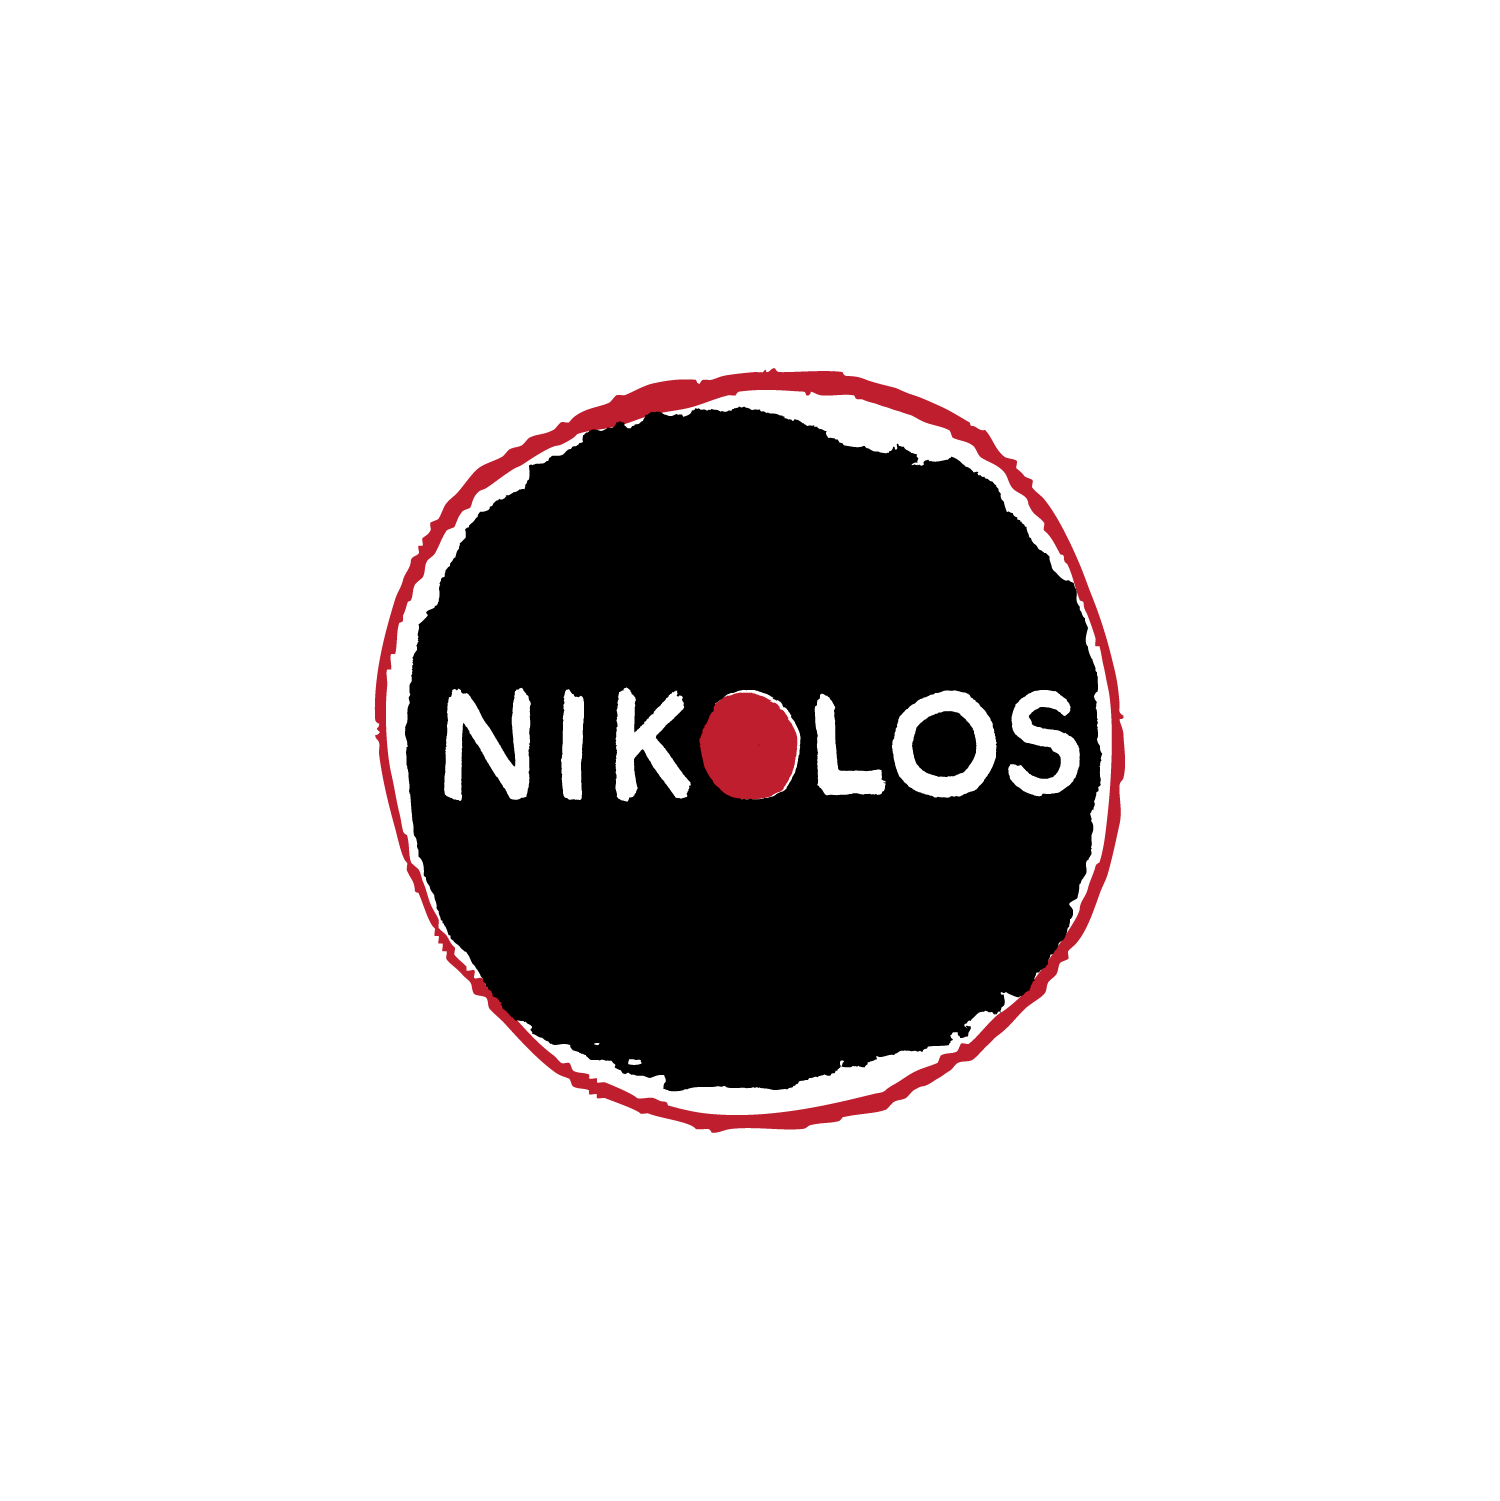 Nokolos logo by OLSON MCINTYRE